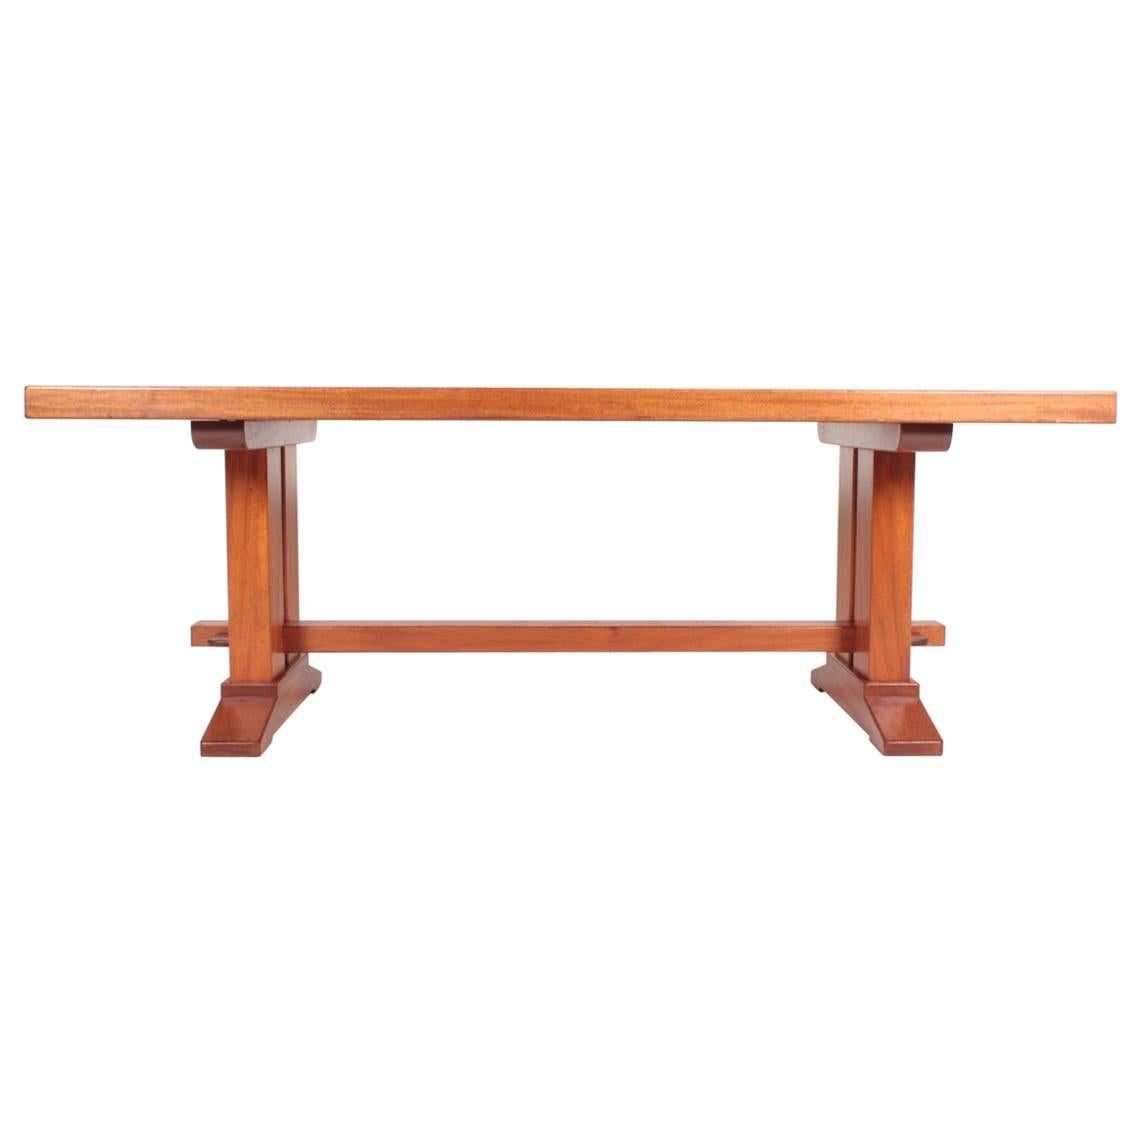 Custom Made Table in Solid Mahogany by Søborg Møbler, Danish Modern Design 1980s For Sale